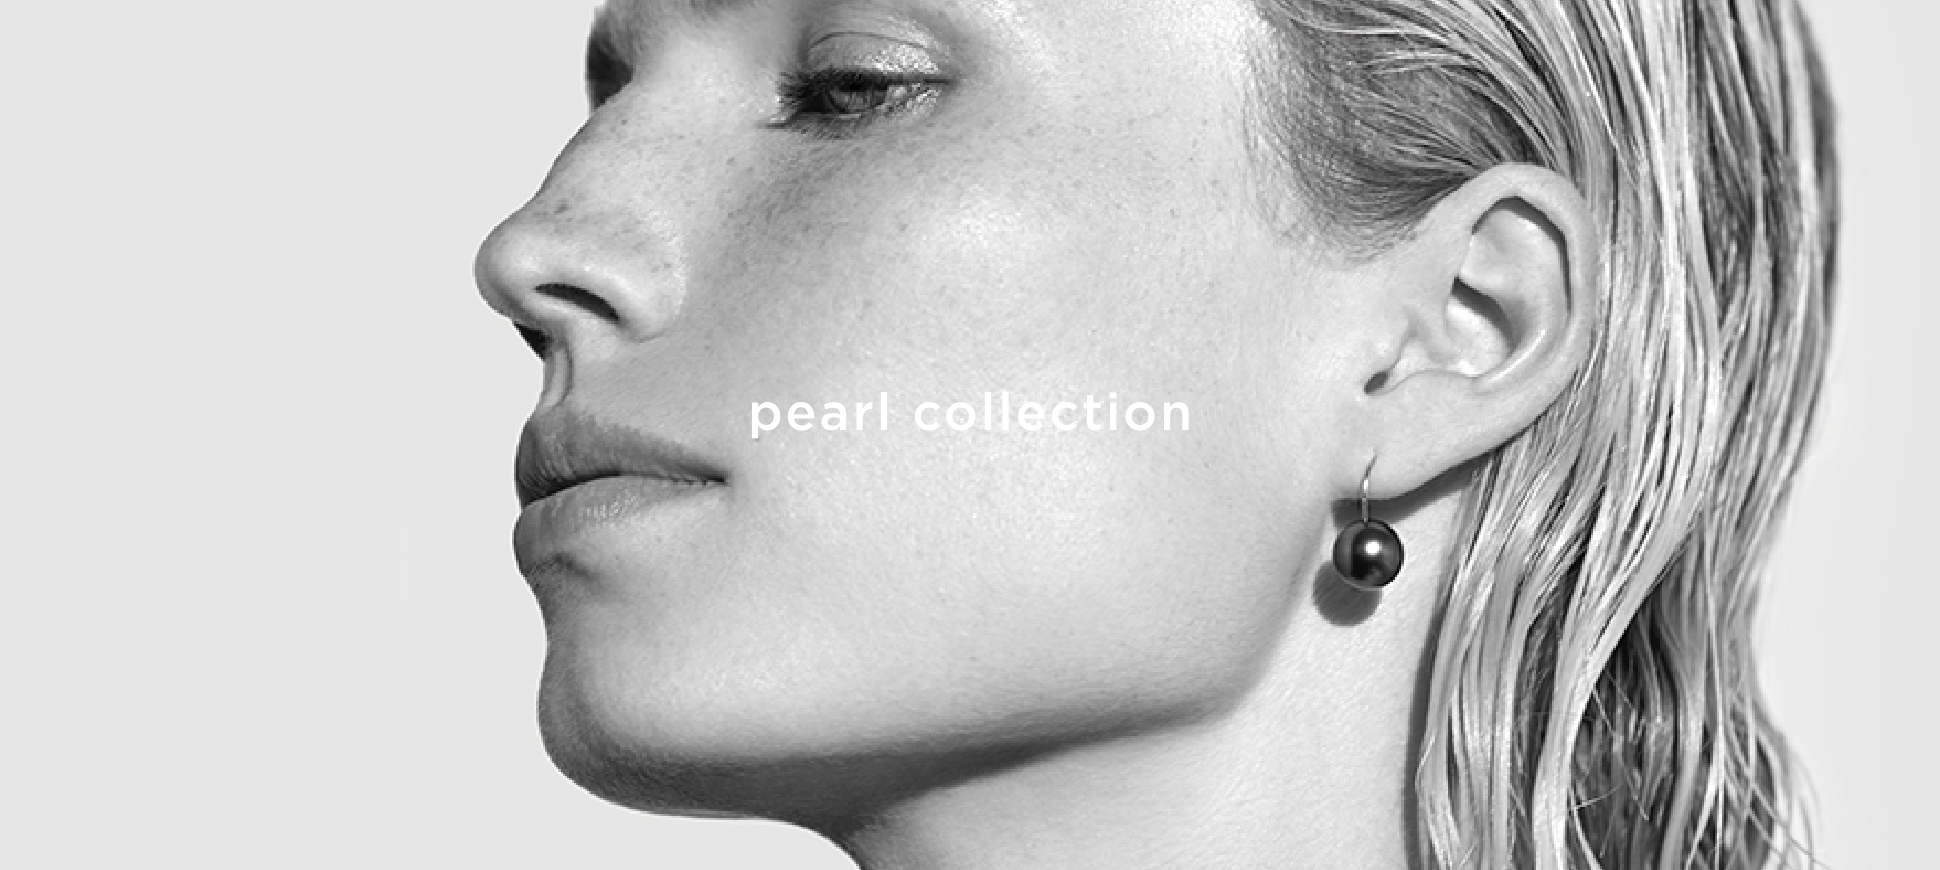 pearl collection 2022 | ブランイリス 公式ストア